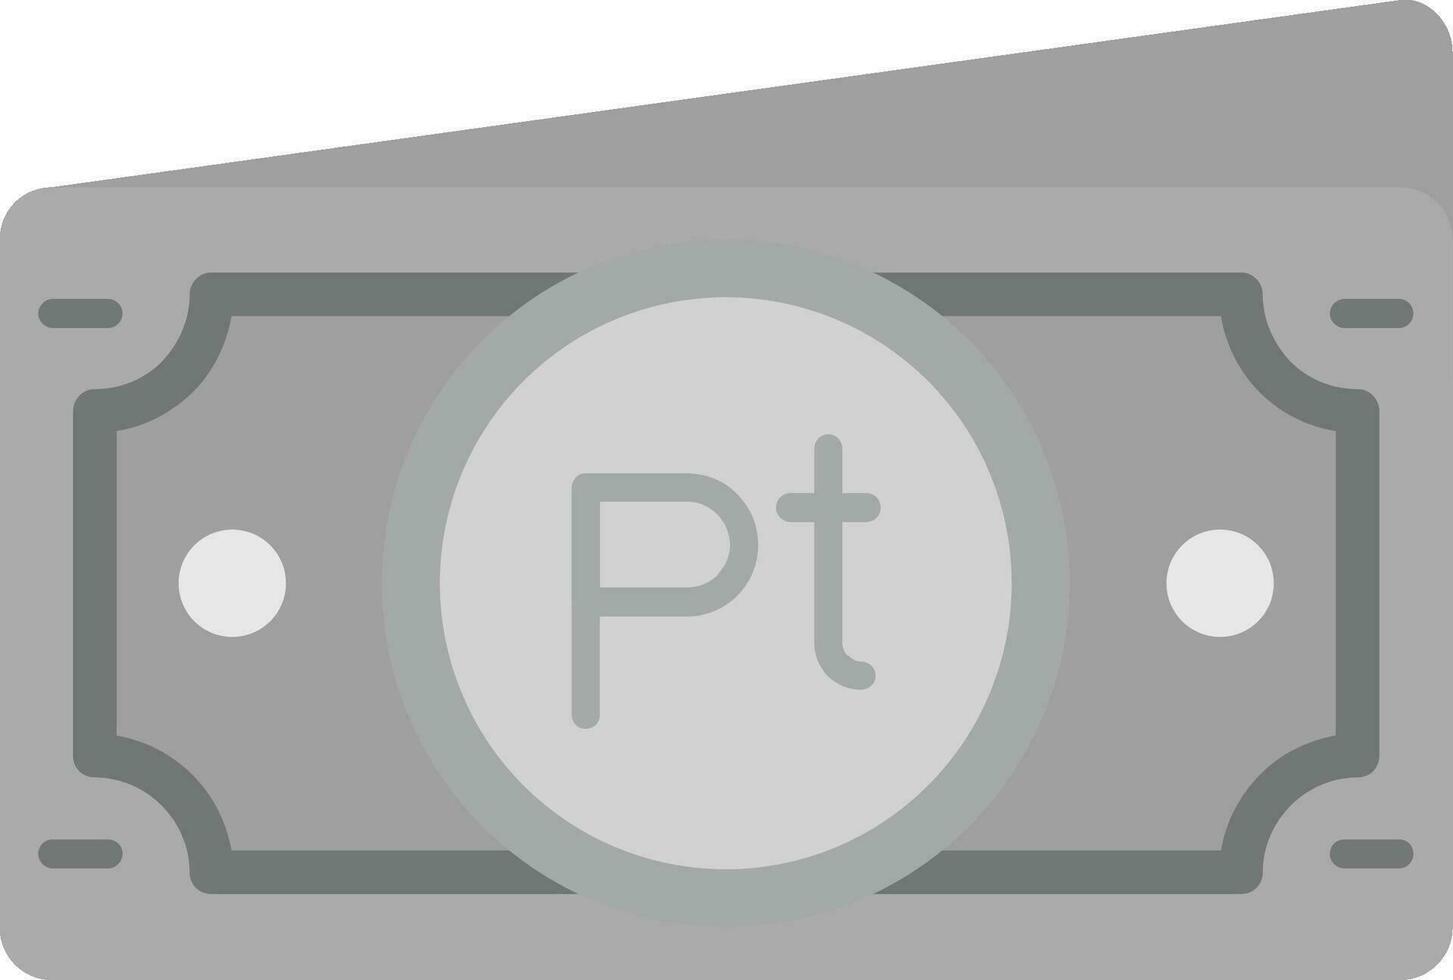 peseta grå skala ikon vektor